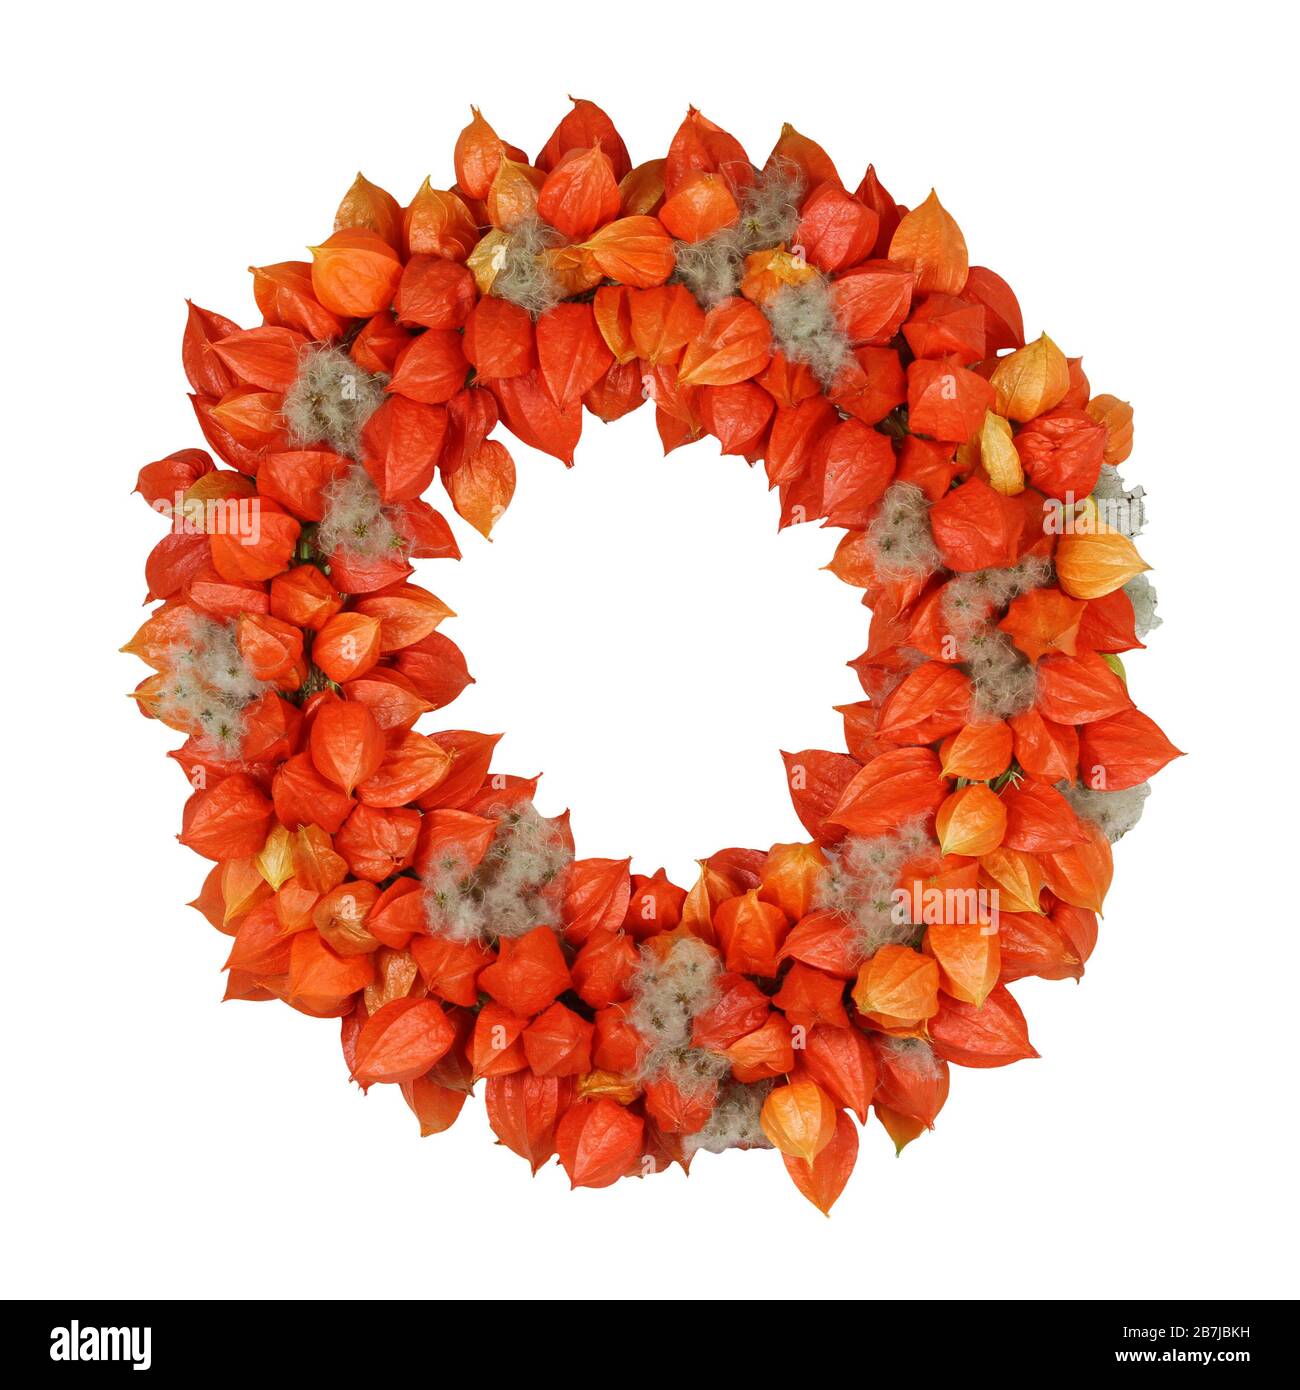 Autumnal Wreath with Physalis and Withywind (Physalis alkekengi and Clematis vitalba) Stock Photo